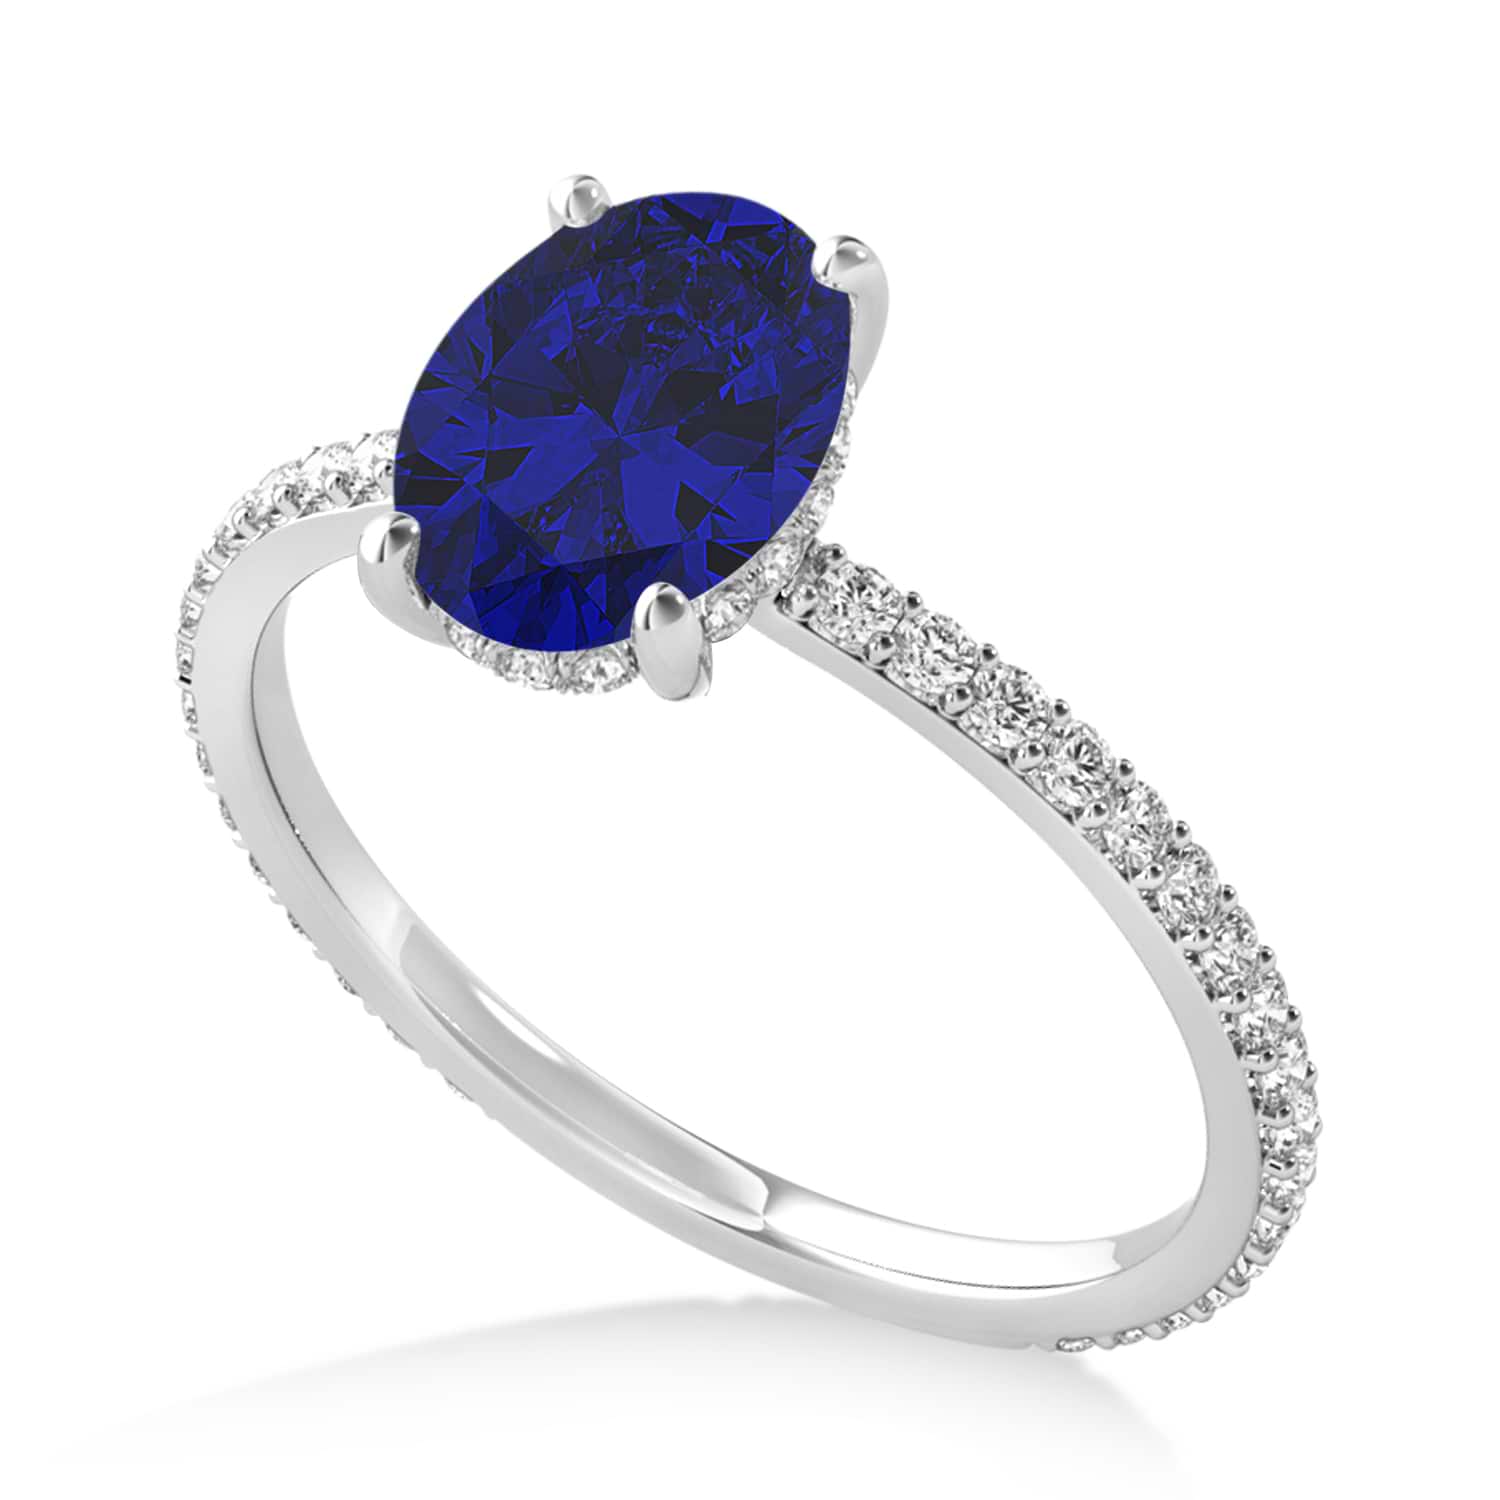 Oval Blue Sapphire & Diamond Hidden Halo Engagement Ring Palladium (0.76ct)